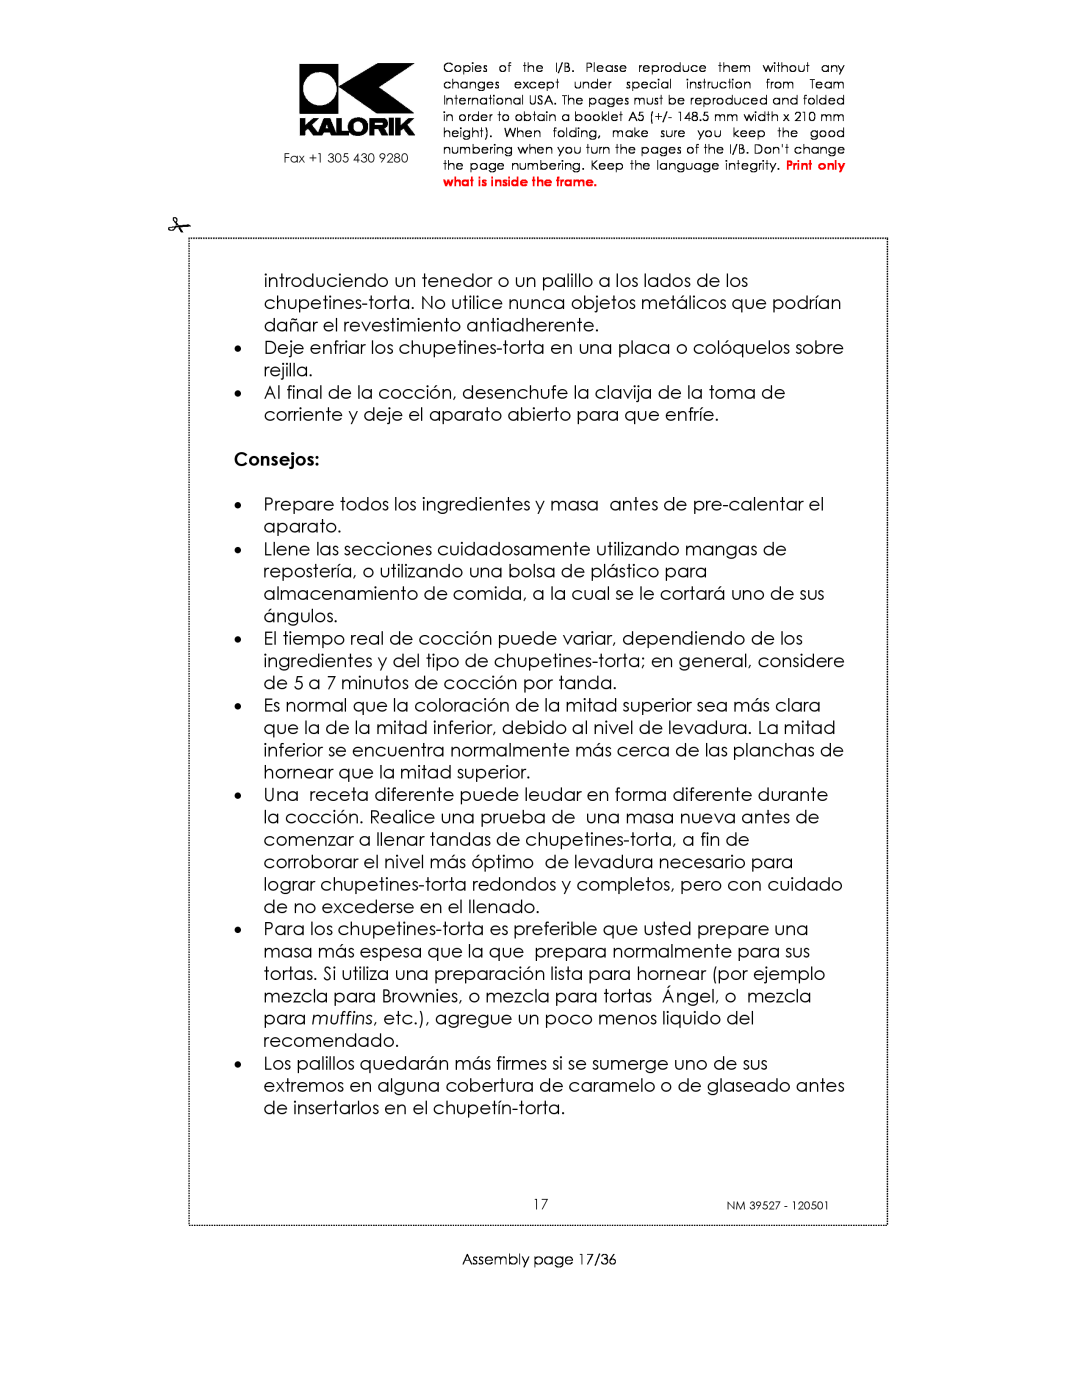 Kalorik NM 39527 manual Consejos, Assembly page 17/36 